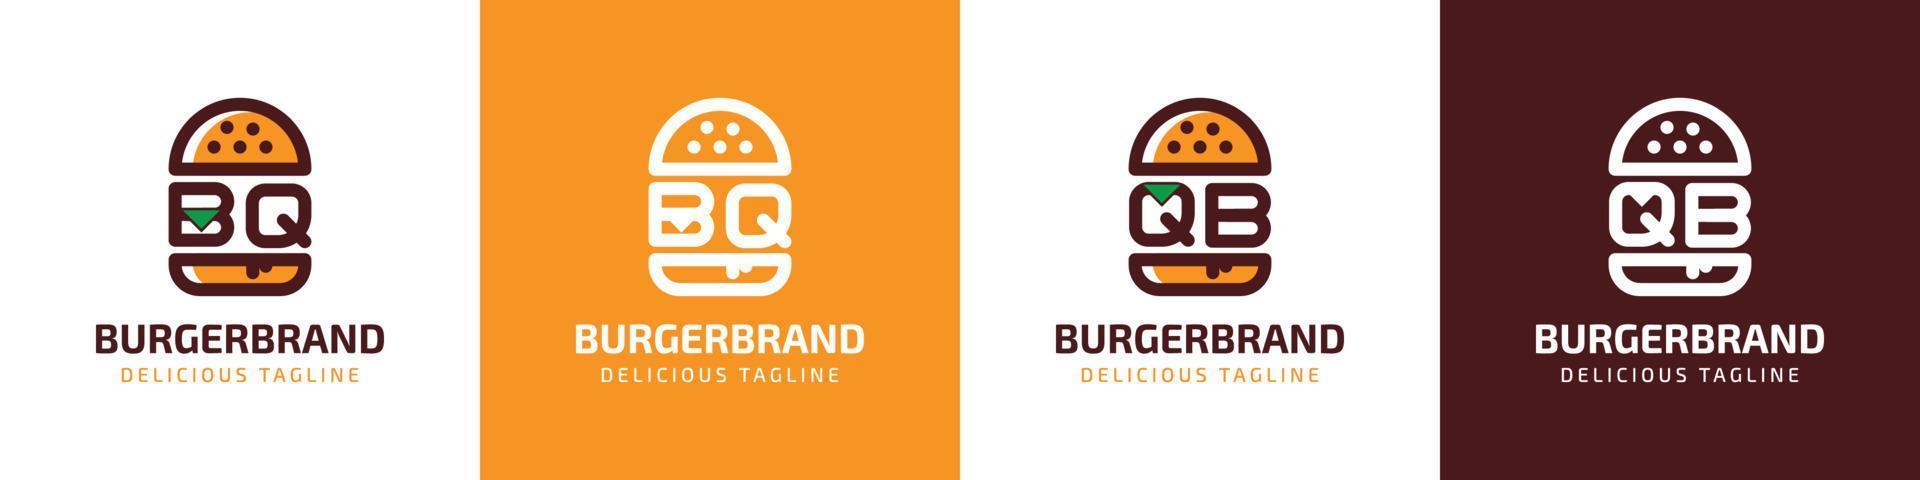 letra bq y qb hamburguesa logo, adecuado para ninguna negocio relacionado a hamburguesa con bq o qb iniciales. vector